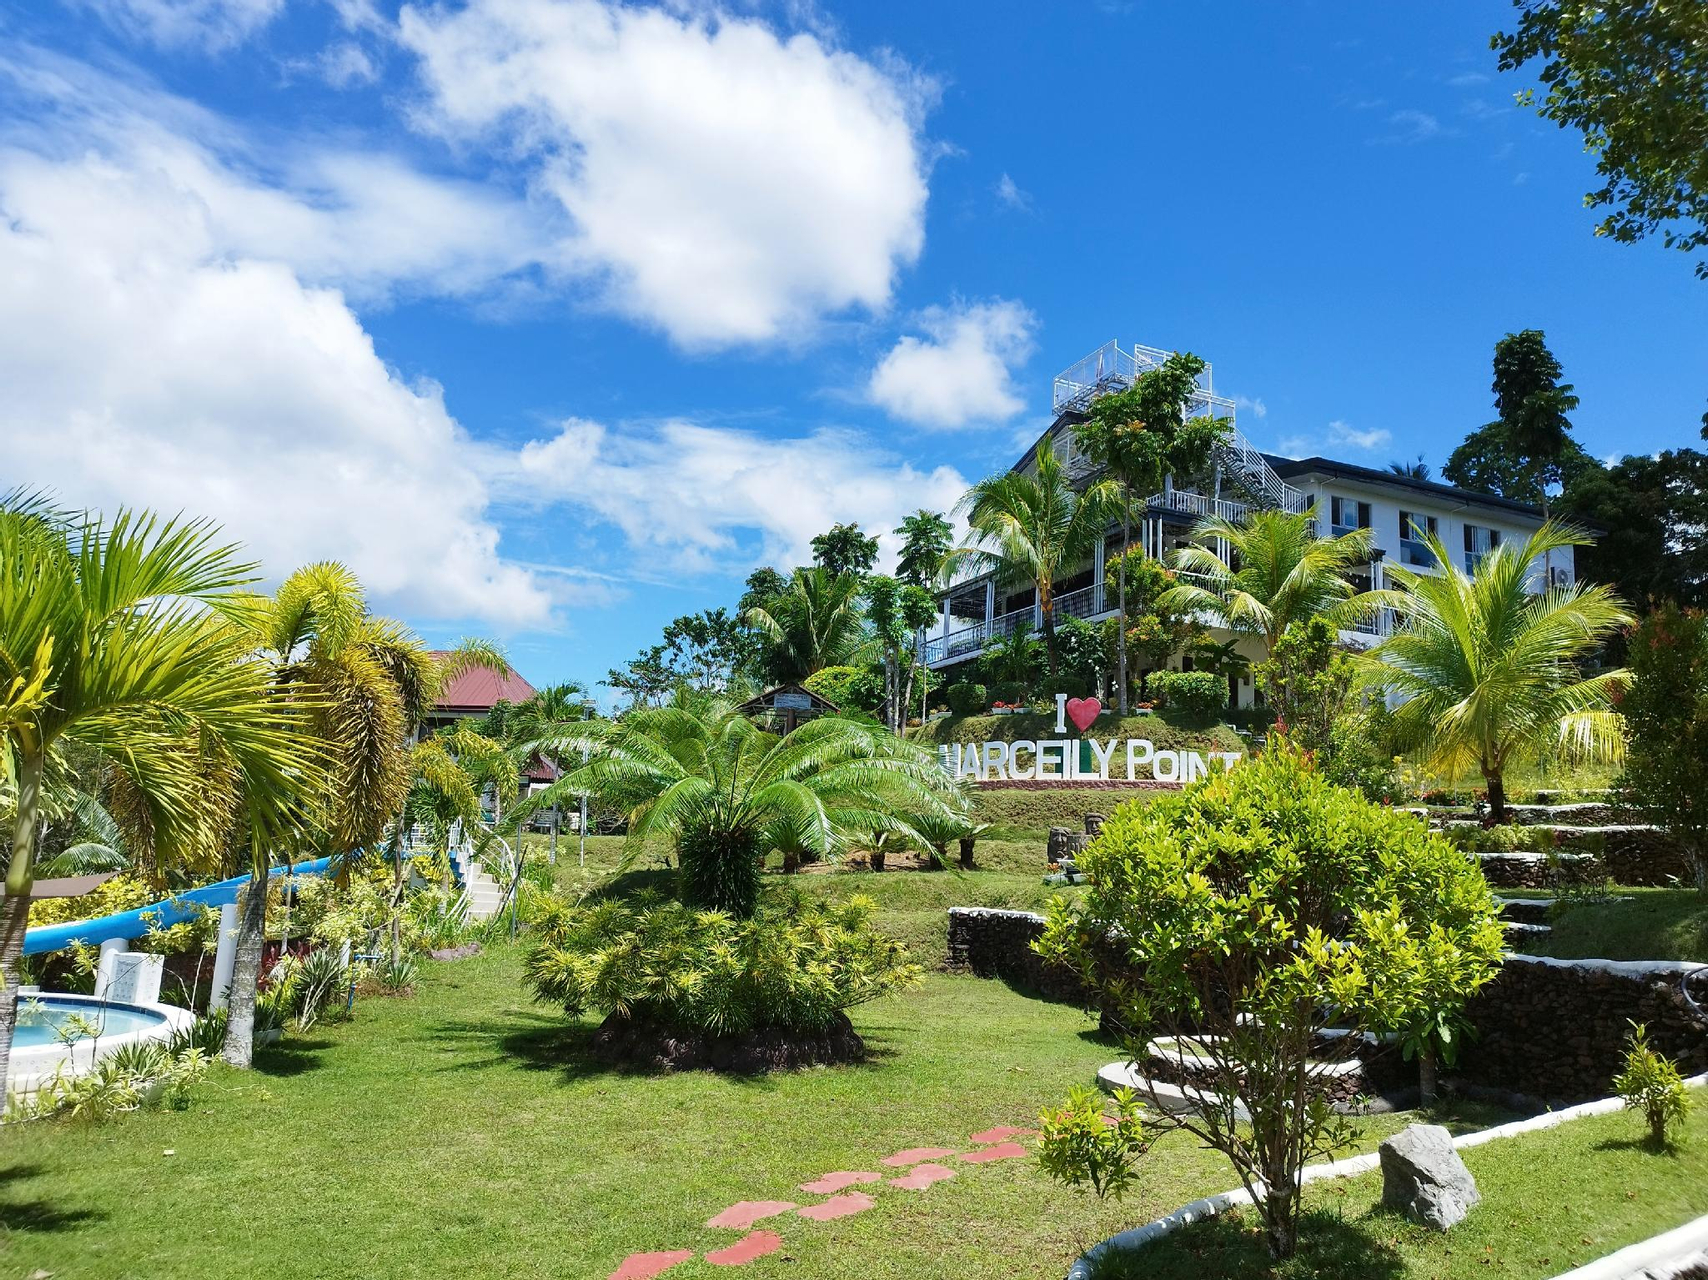 Exterior & Views, RedDoorz @ Marceily Point Resort Guimaras, Buenavista